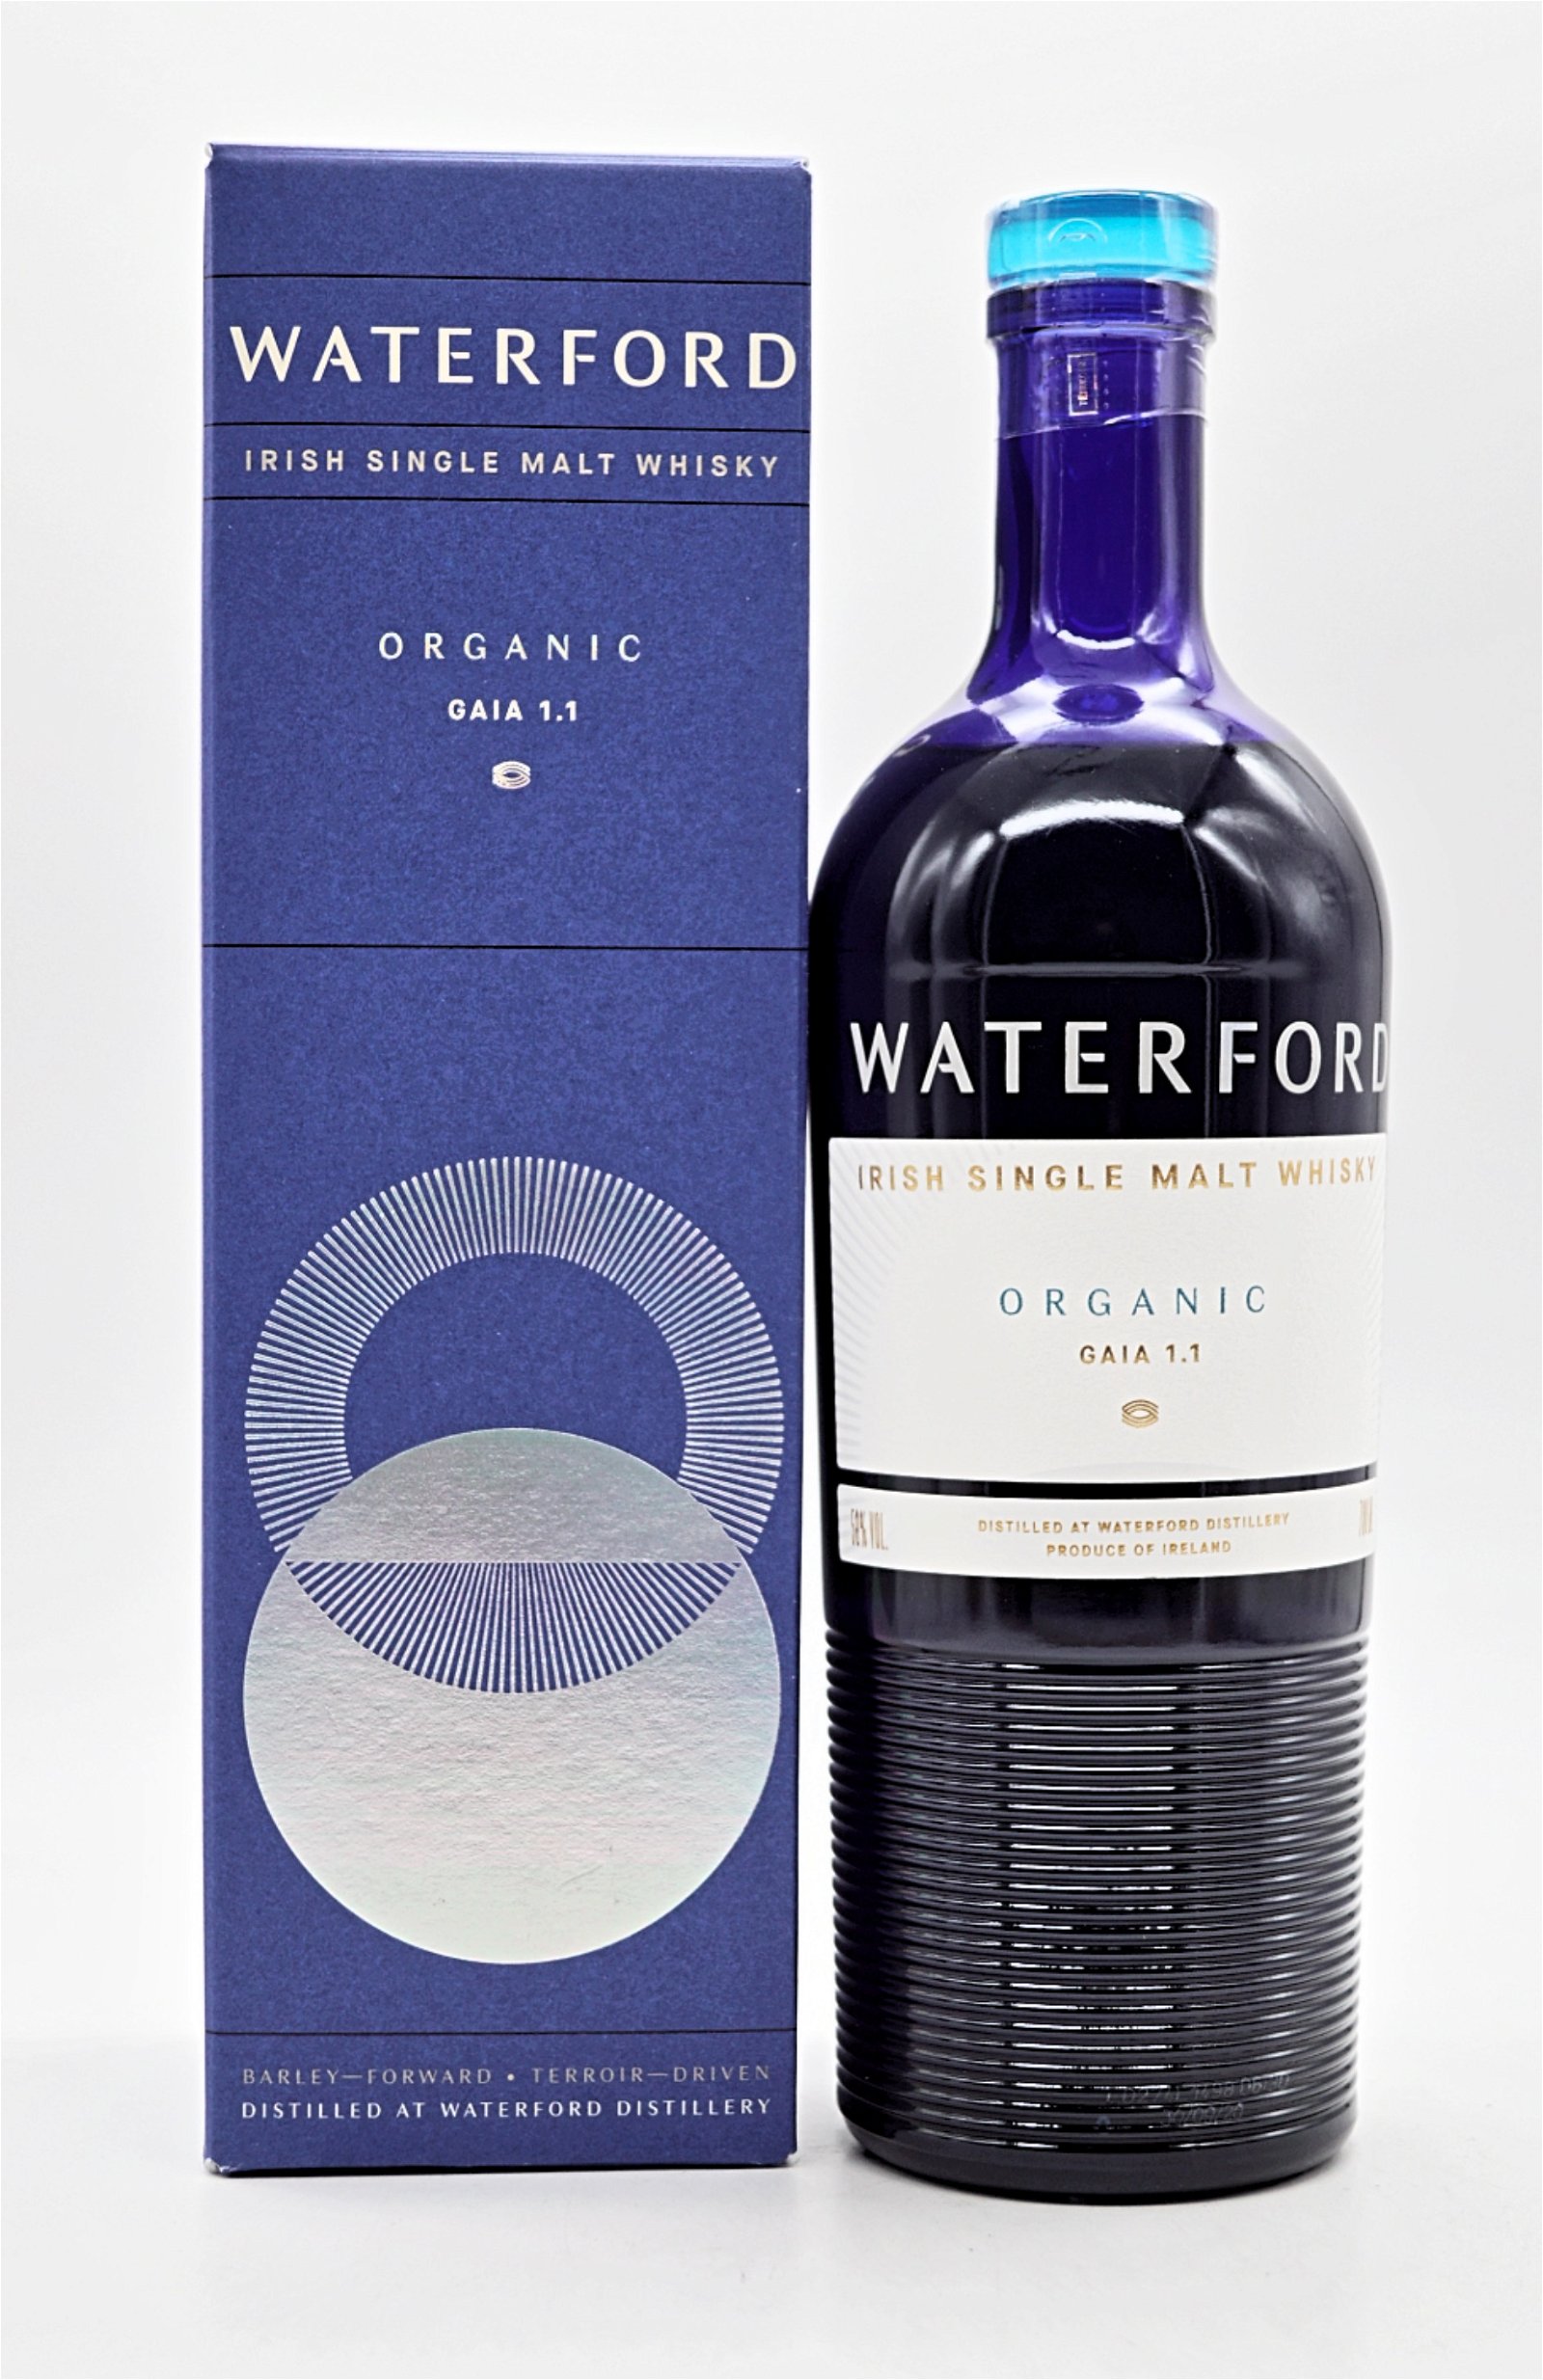 Waterford Organic Gaia 1.1. Arcadian Series Irish Single Malt Whisky